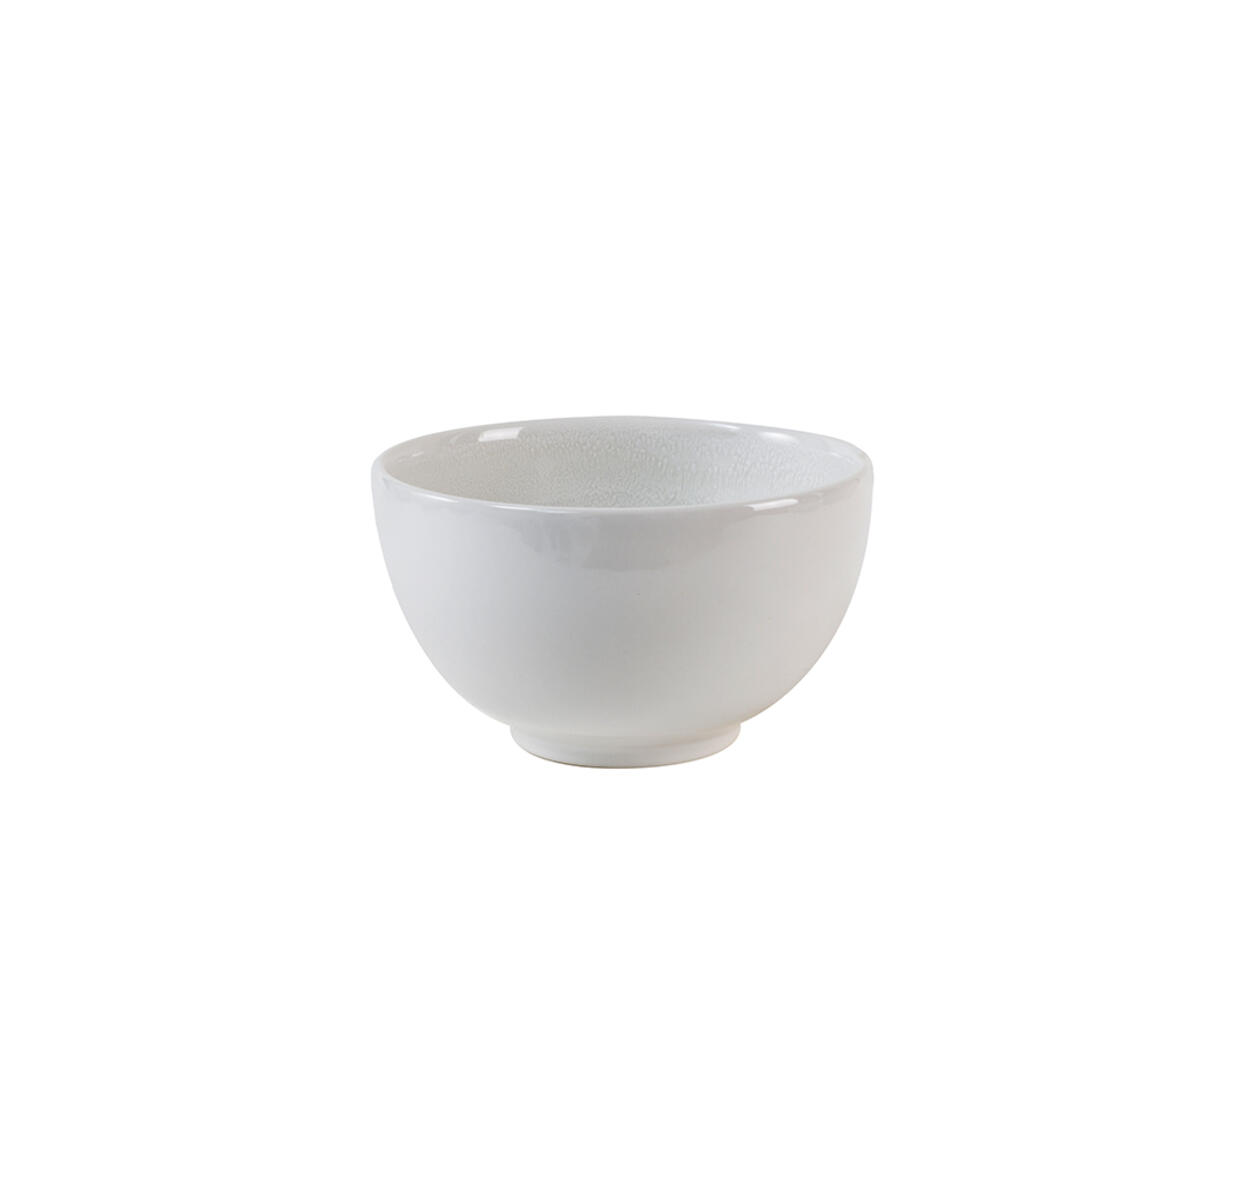 bowl s tourron neige ceramic manufacturer